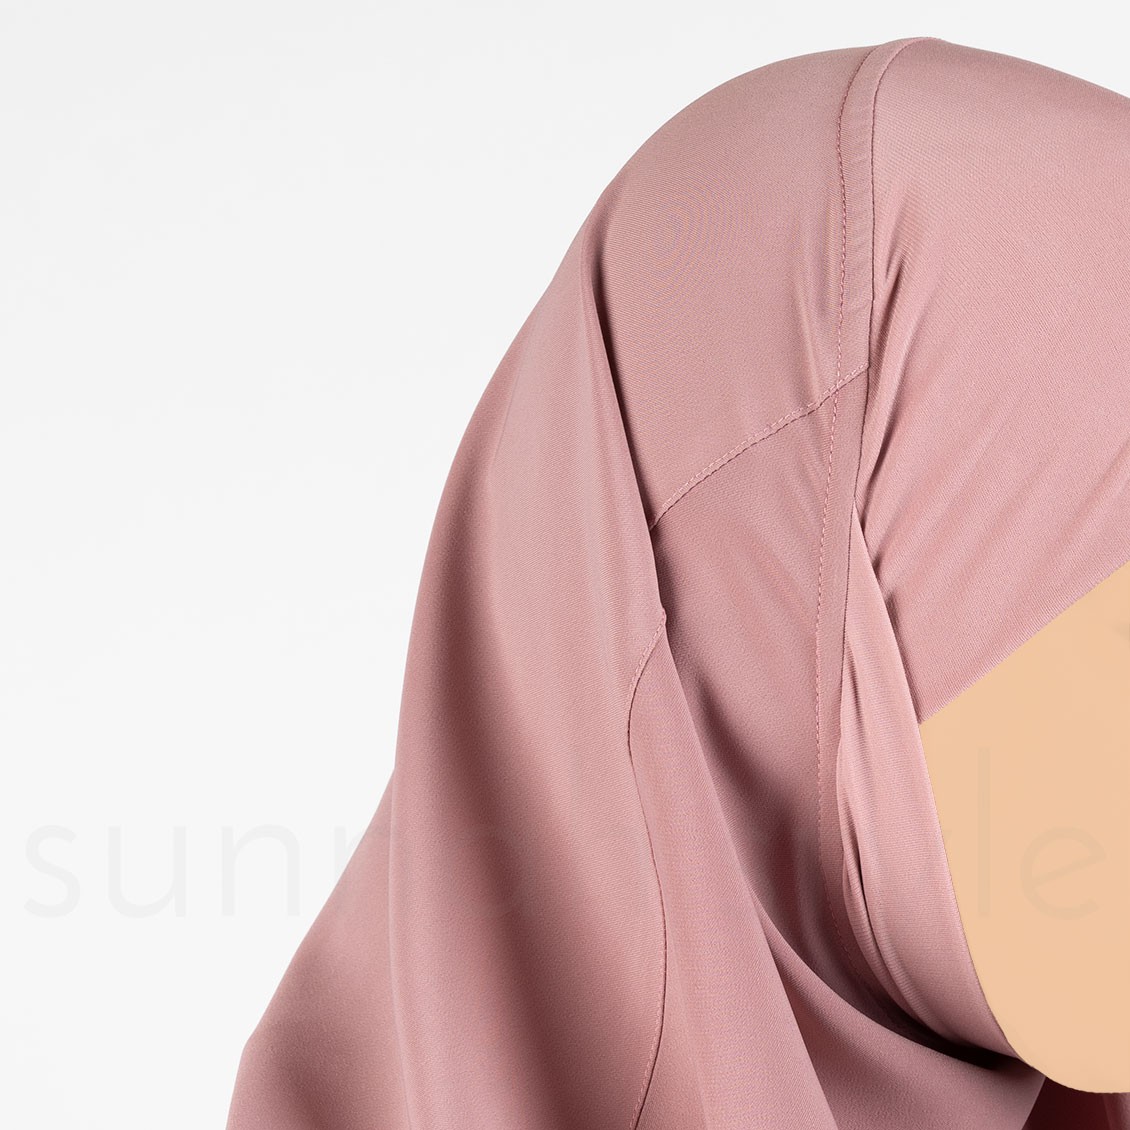 Sunnah Style Signature Jilbab Top Knee Length Dusty Rose